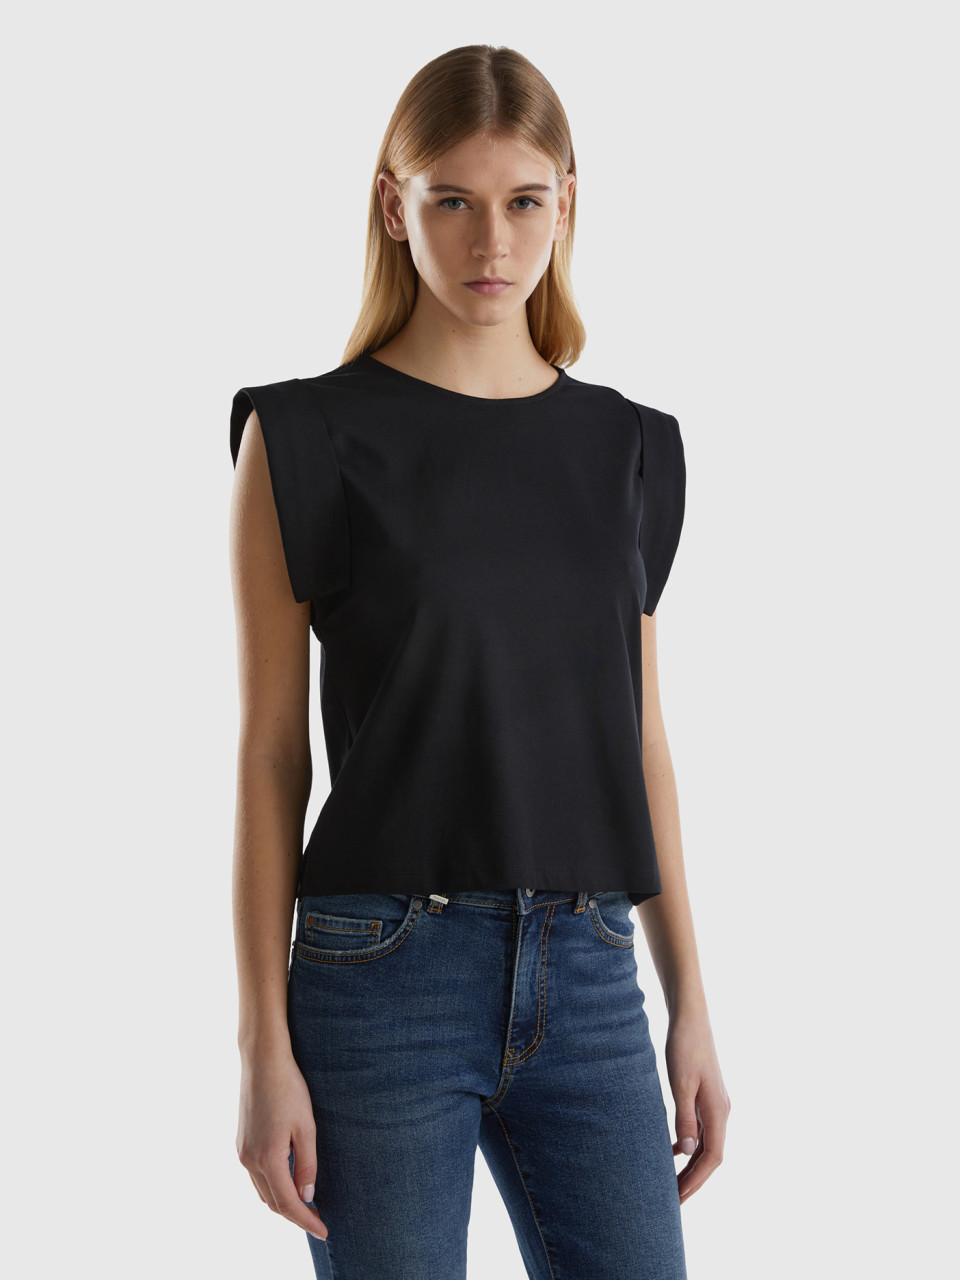 Benetton, T-shirt With Angel Sleeves, Black, Women